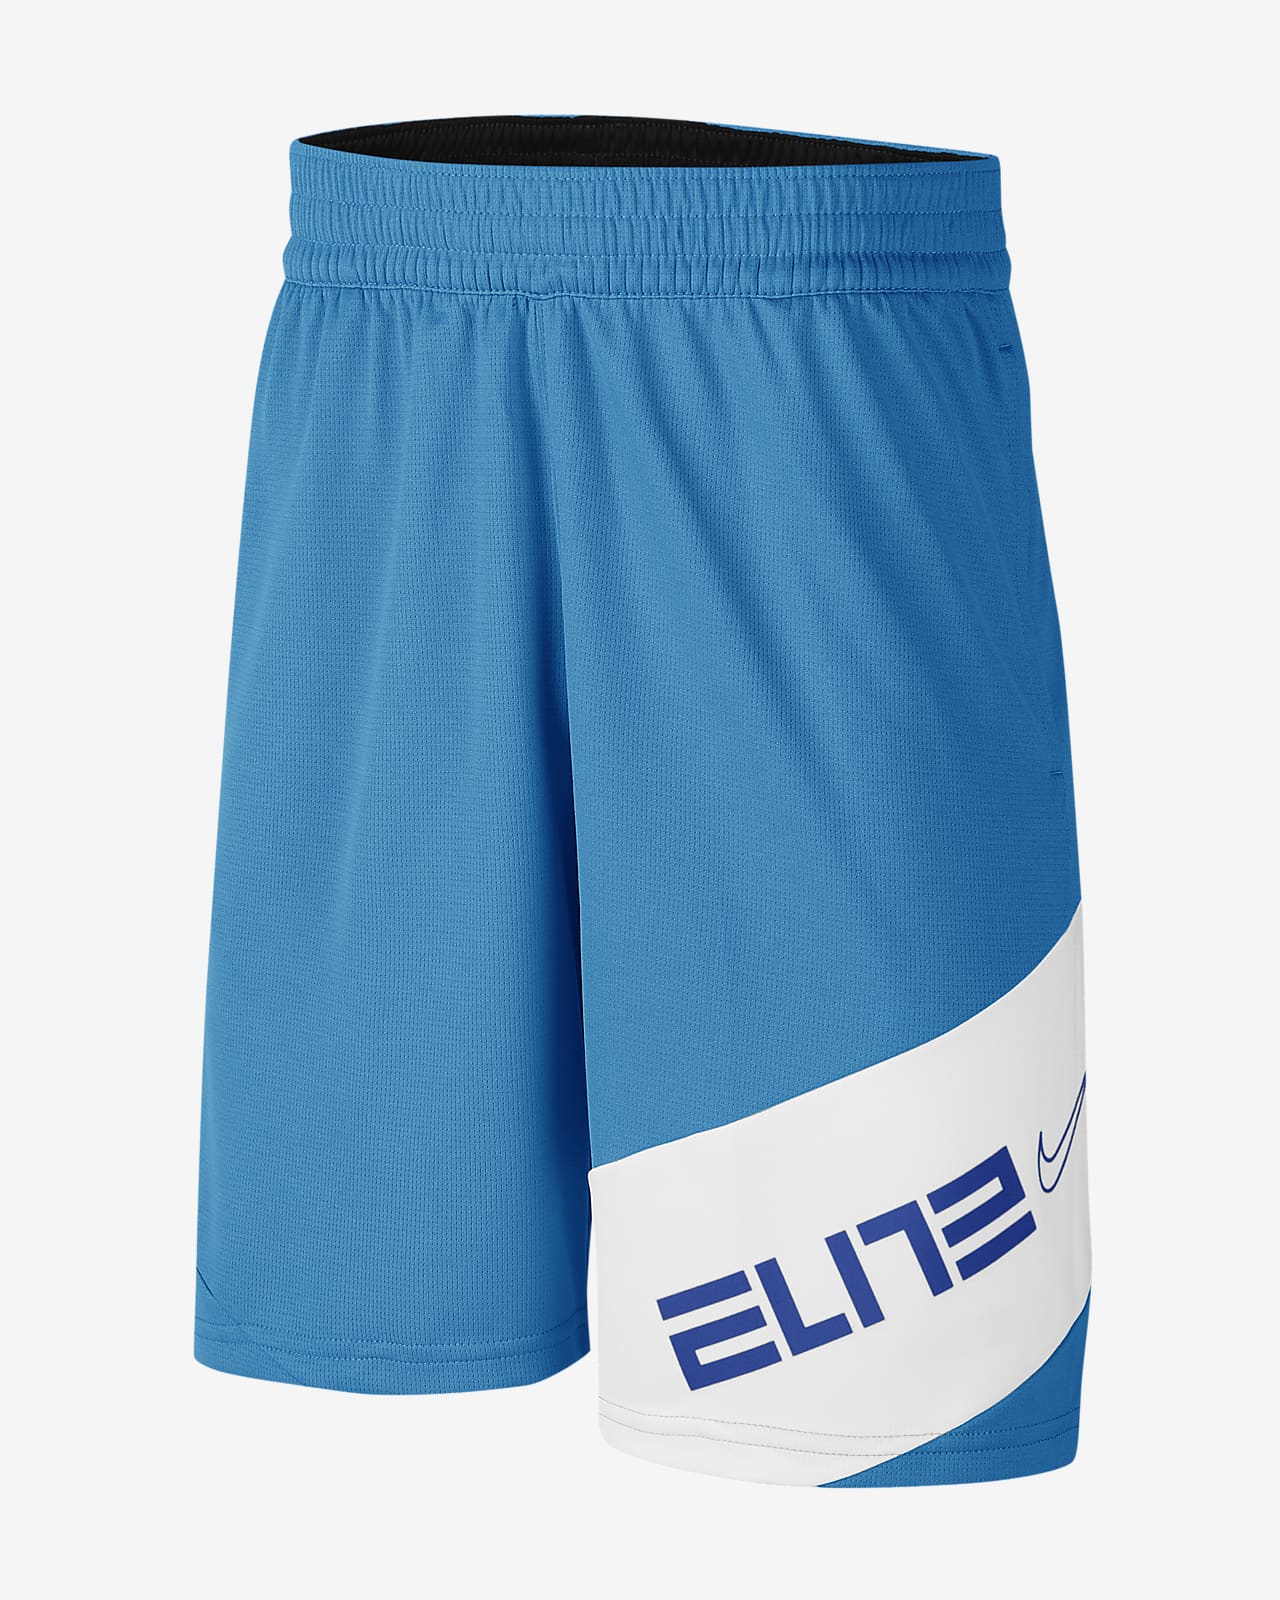 nike elite boys shorts